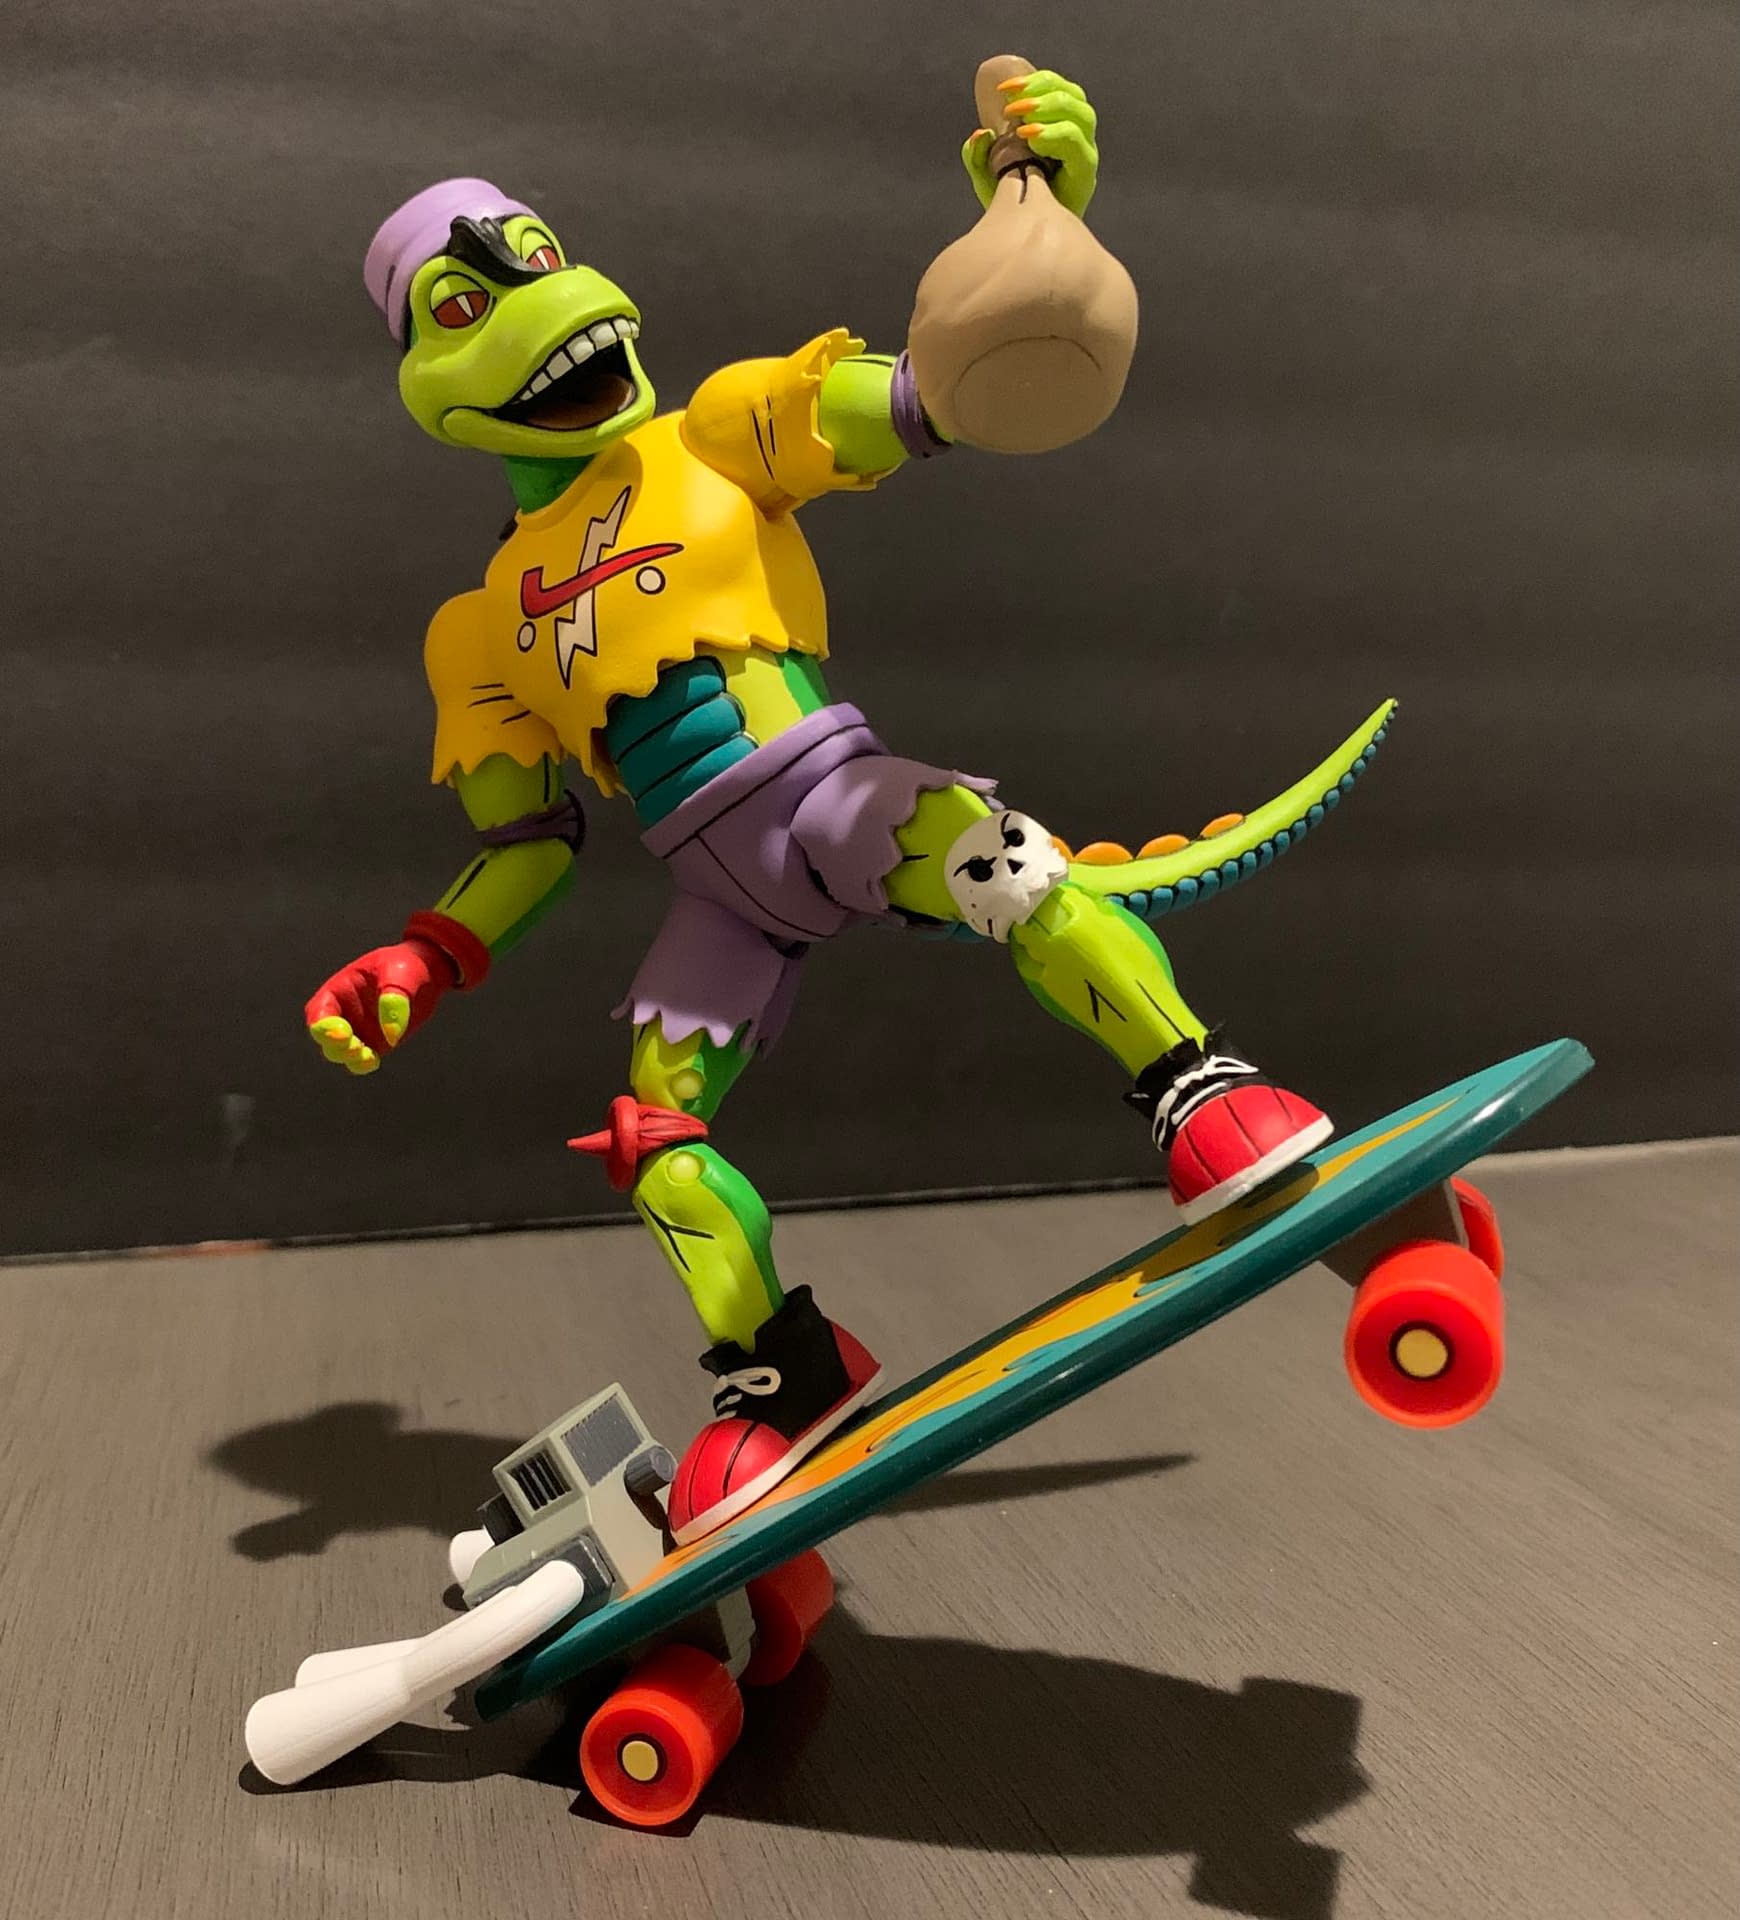 TMNT Collectors Should Skate To Target & Get Mondo Gecko